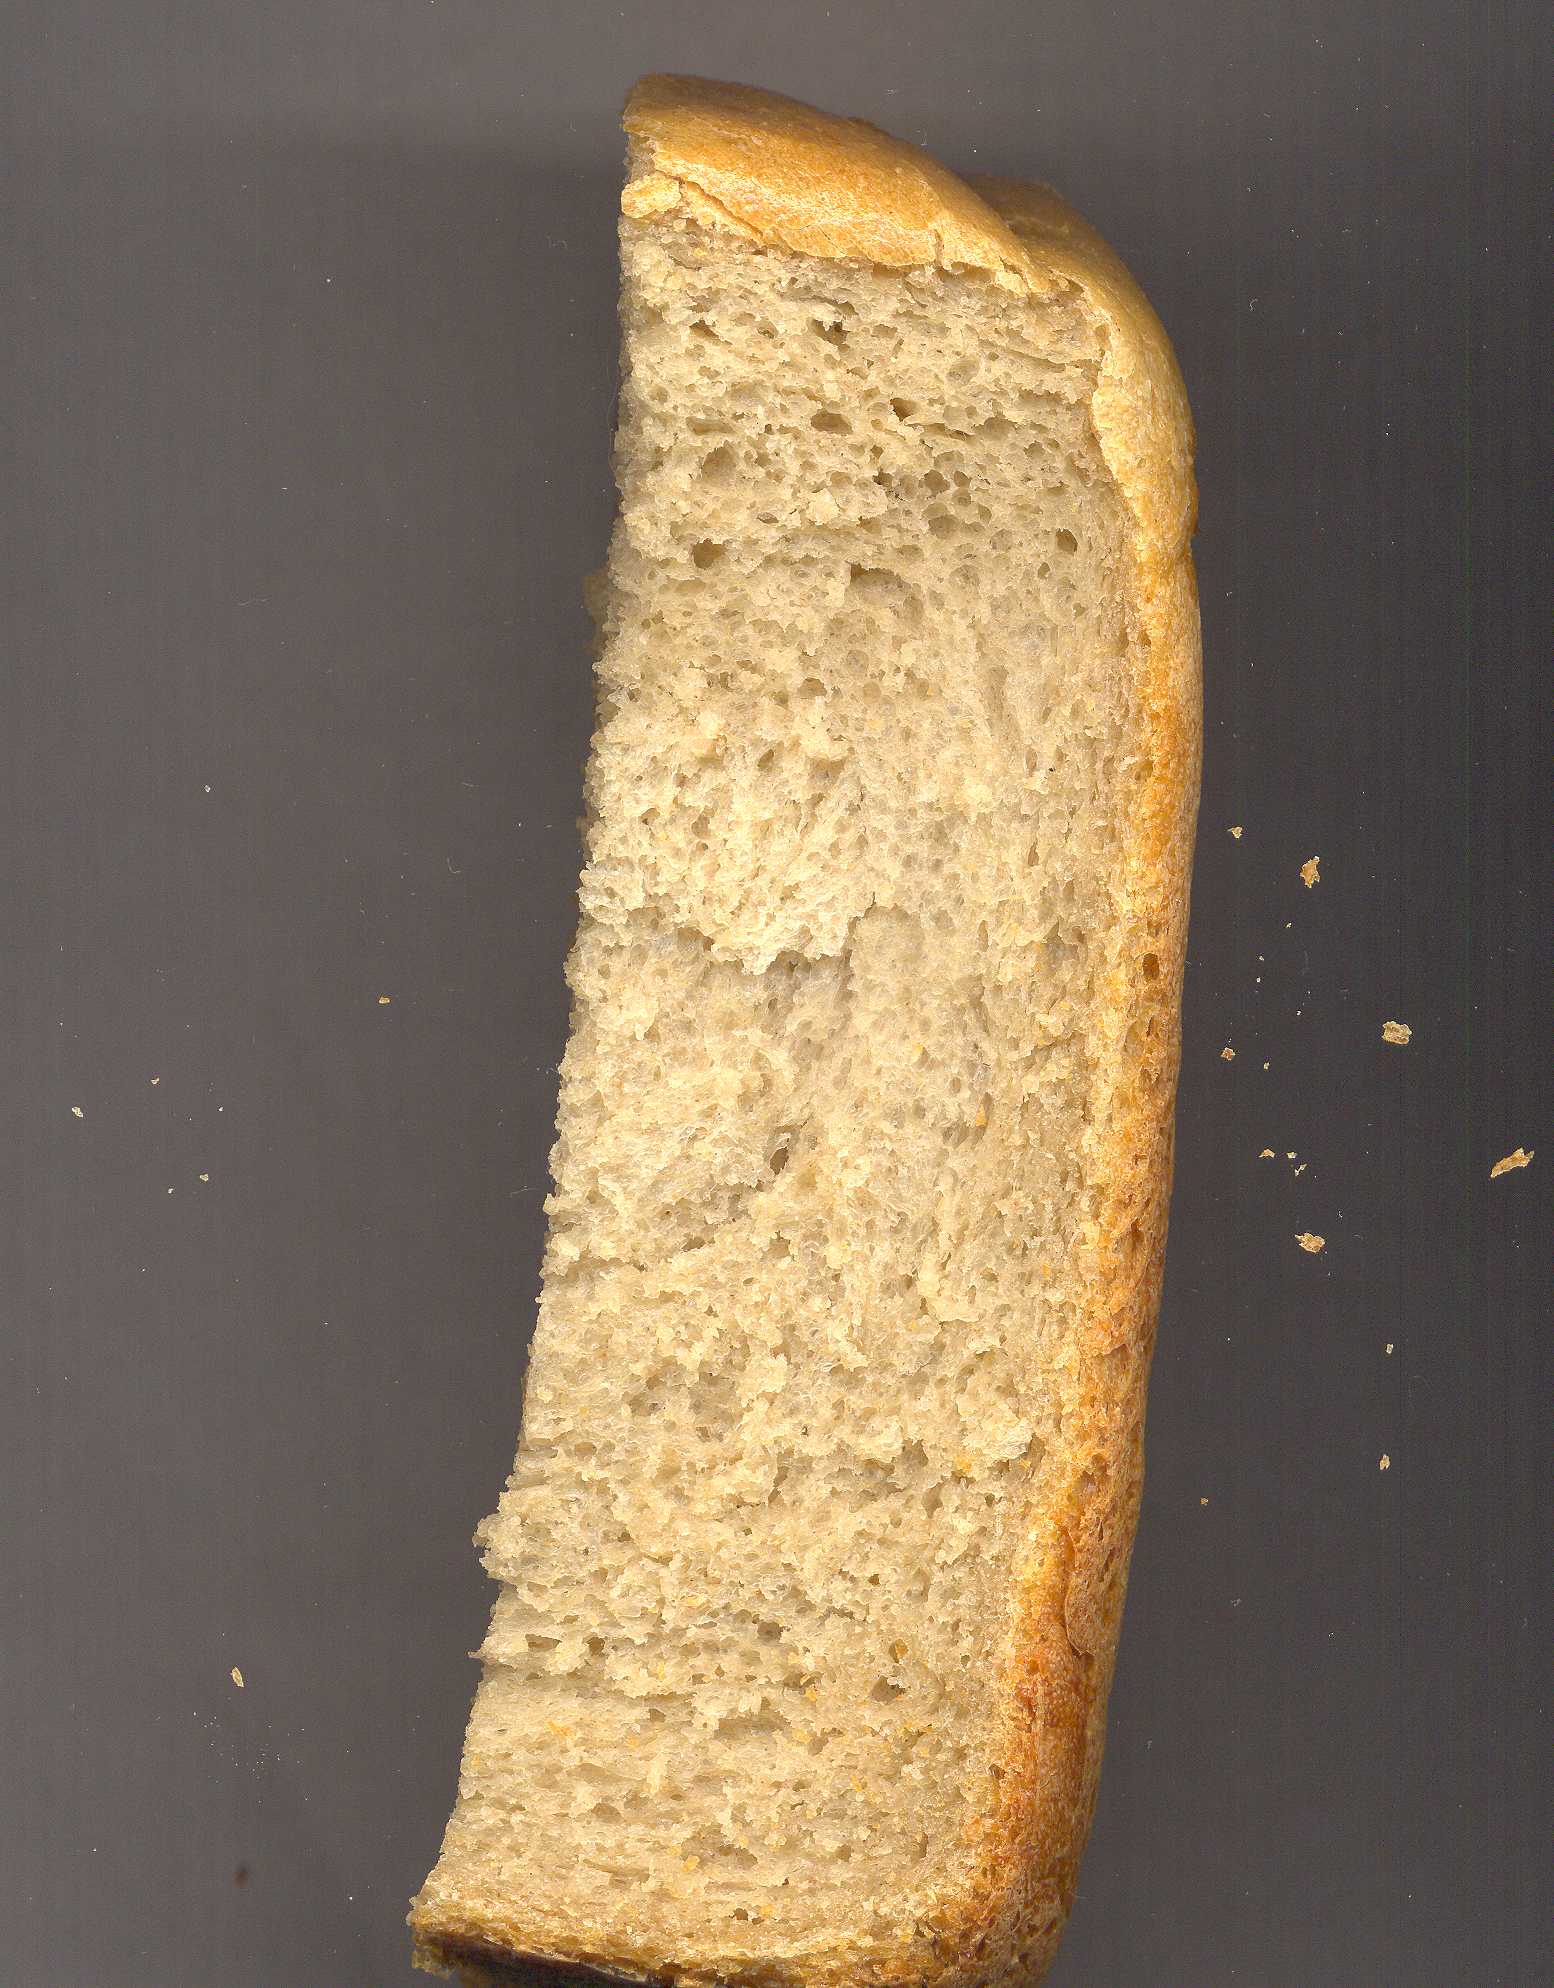 LG HB-1051. Pane di frumento-avena-grano saraceno